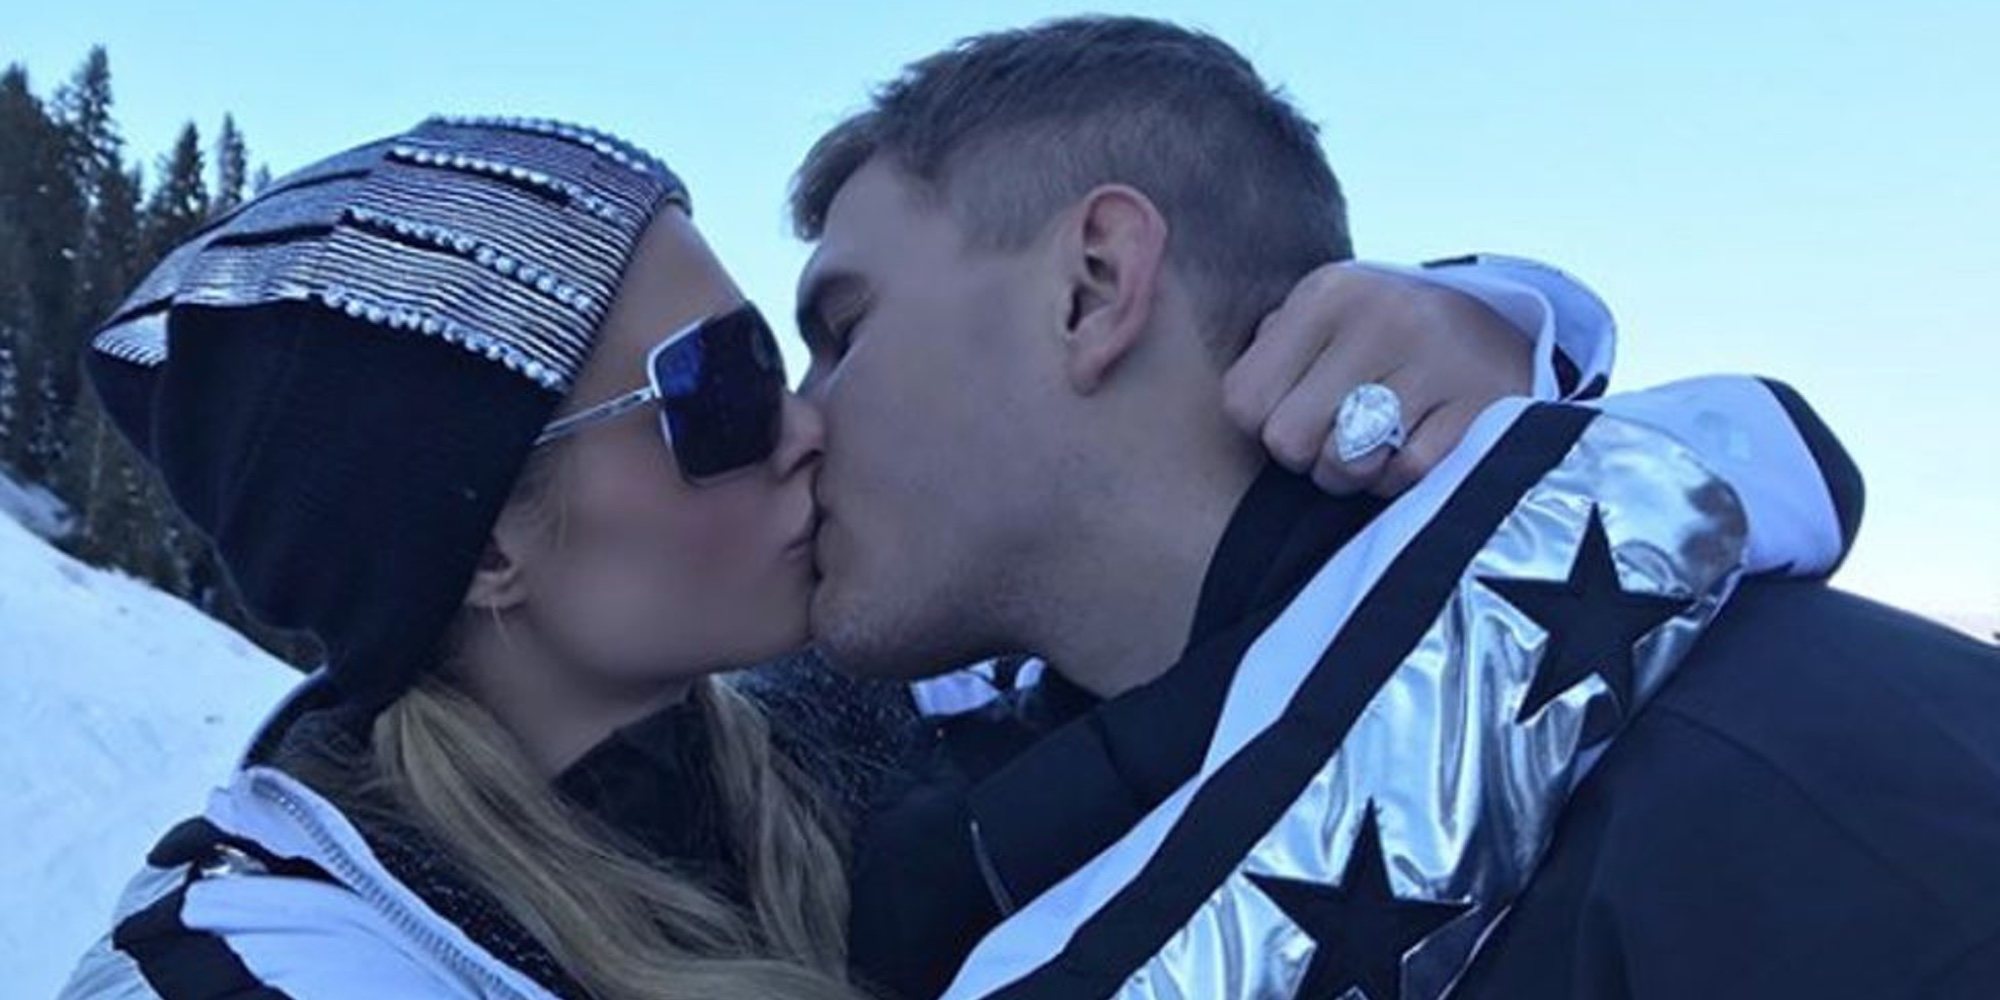 Paris Hilton pospone su boda con Chris Zylka por falta de tiempo